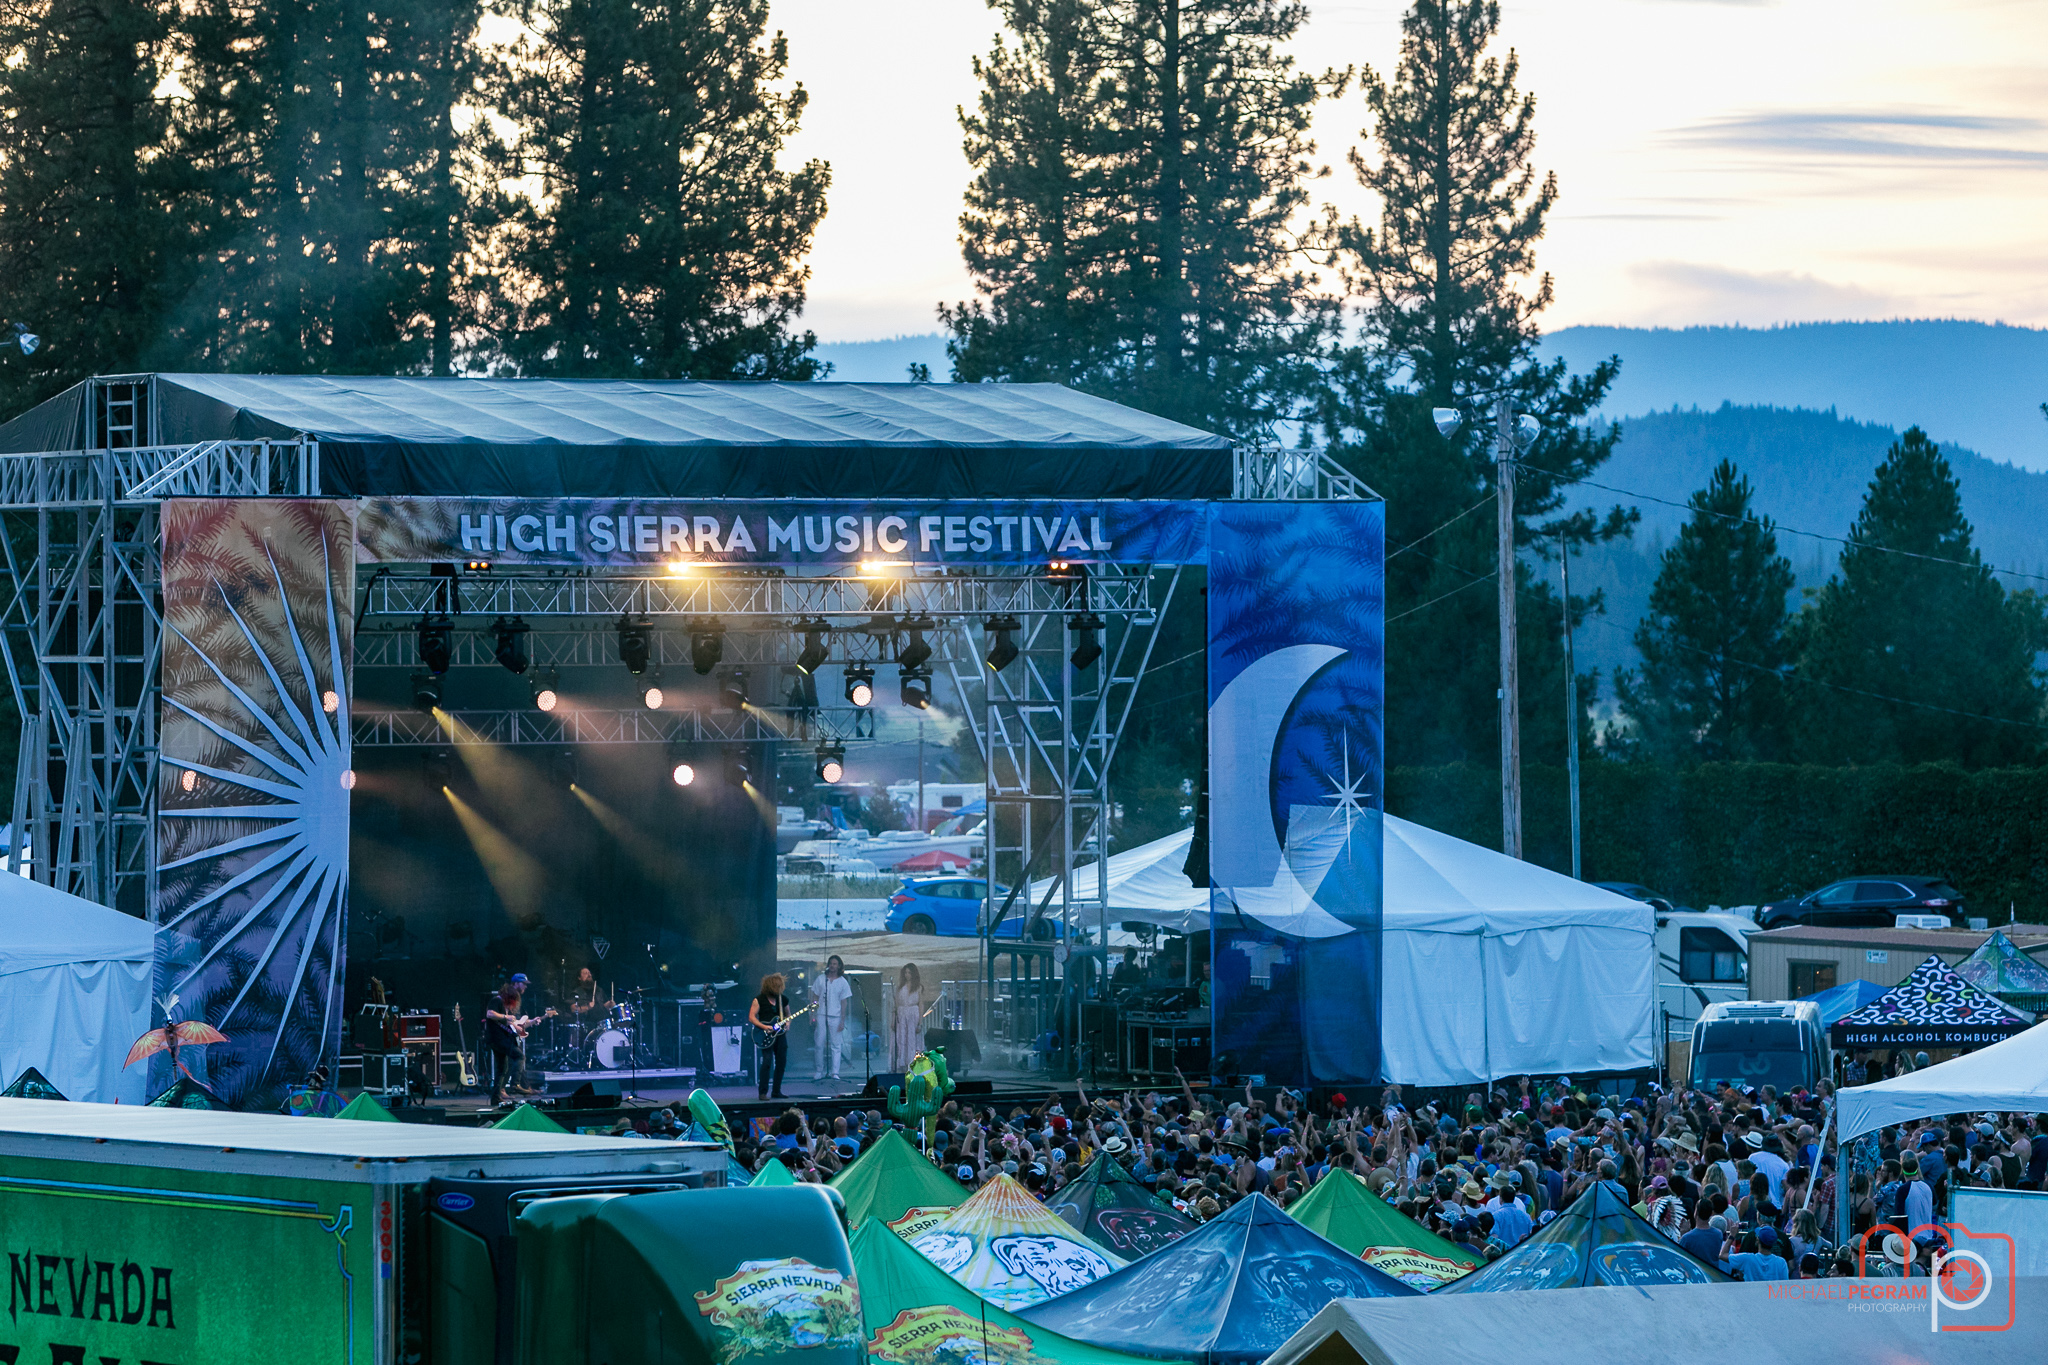 High Sierra Music Festival - photo credit: Michael Pegram